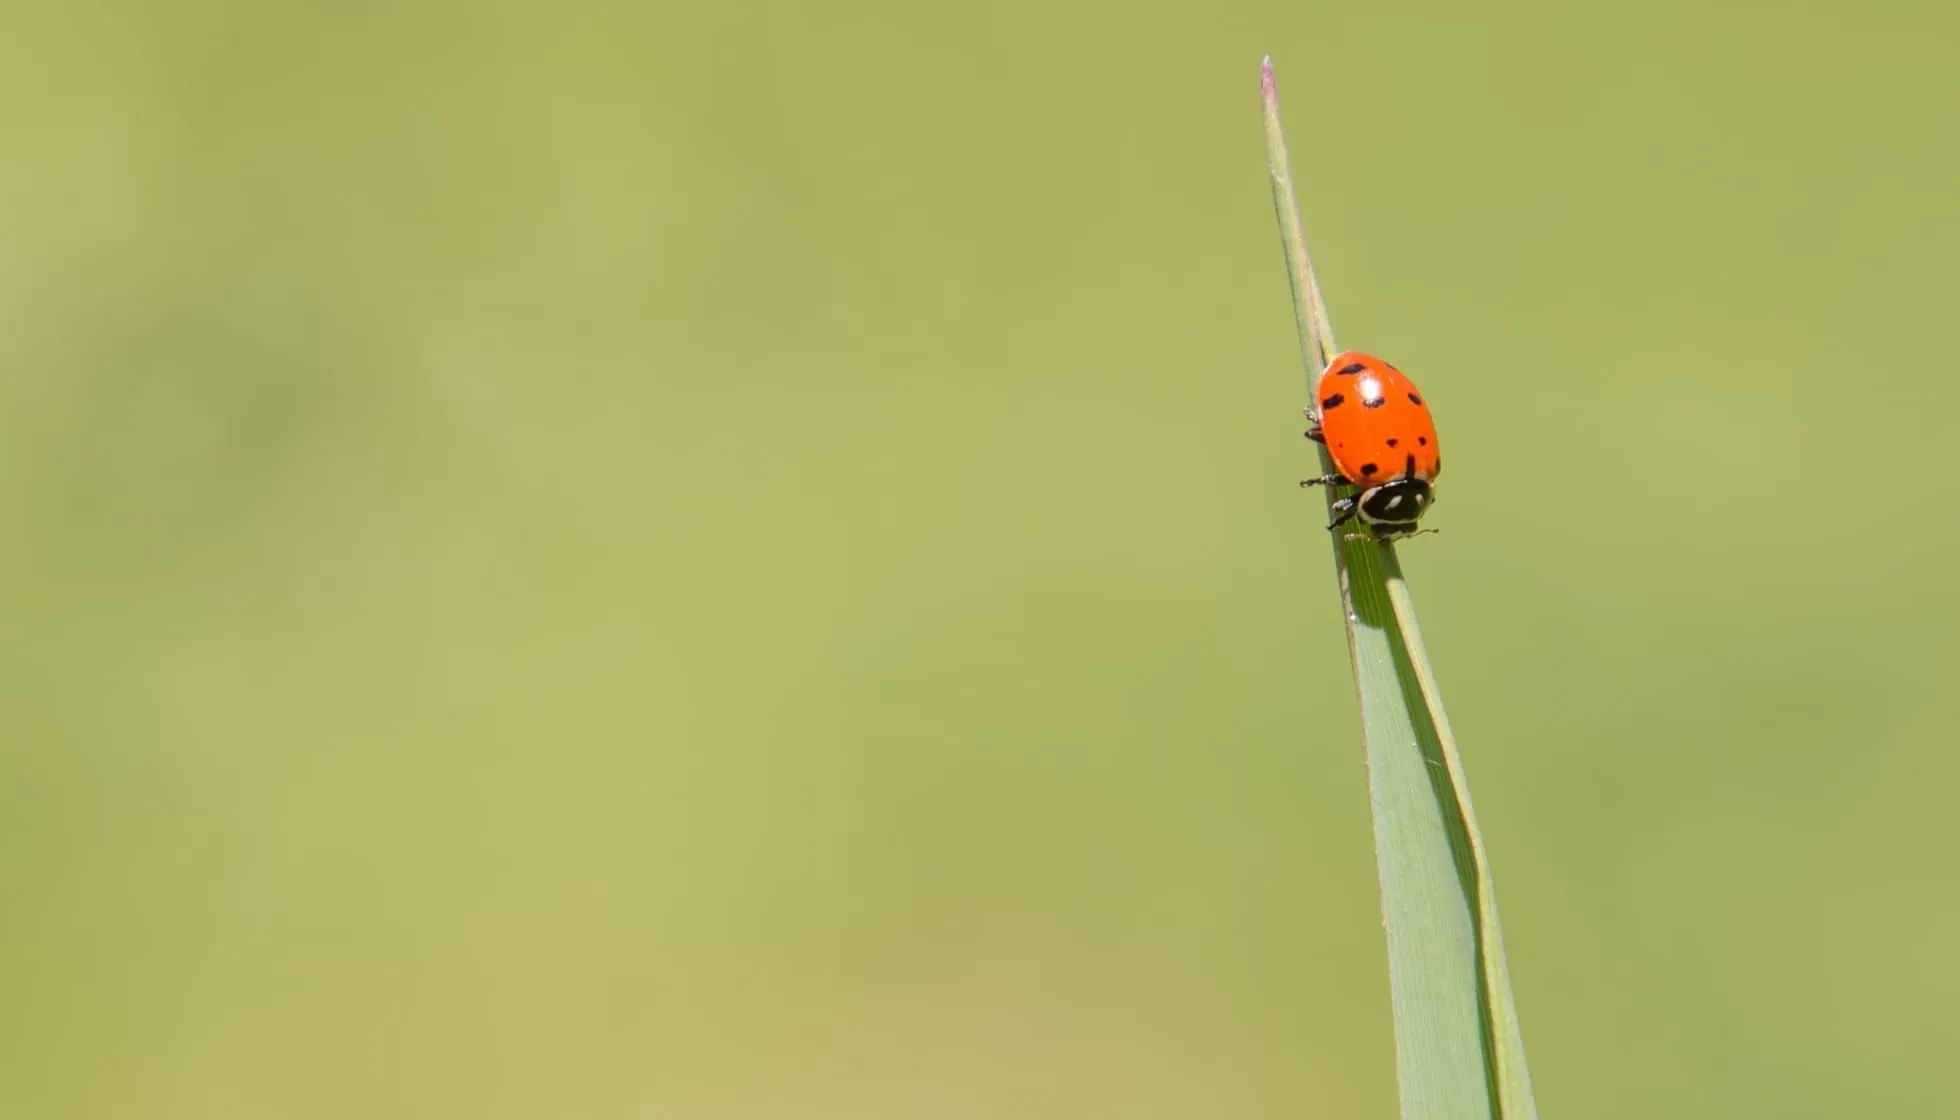 Convergent Ladybug (Hippodamia convergens) on a blade of grass